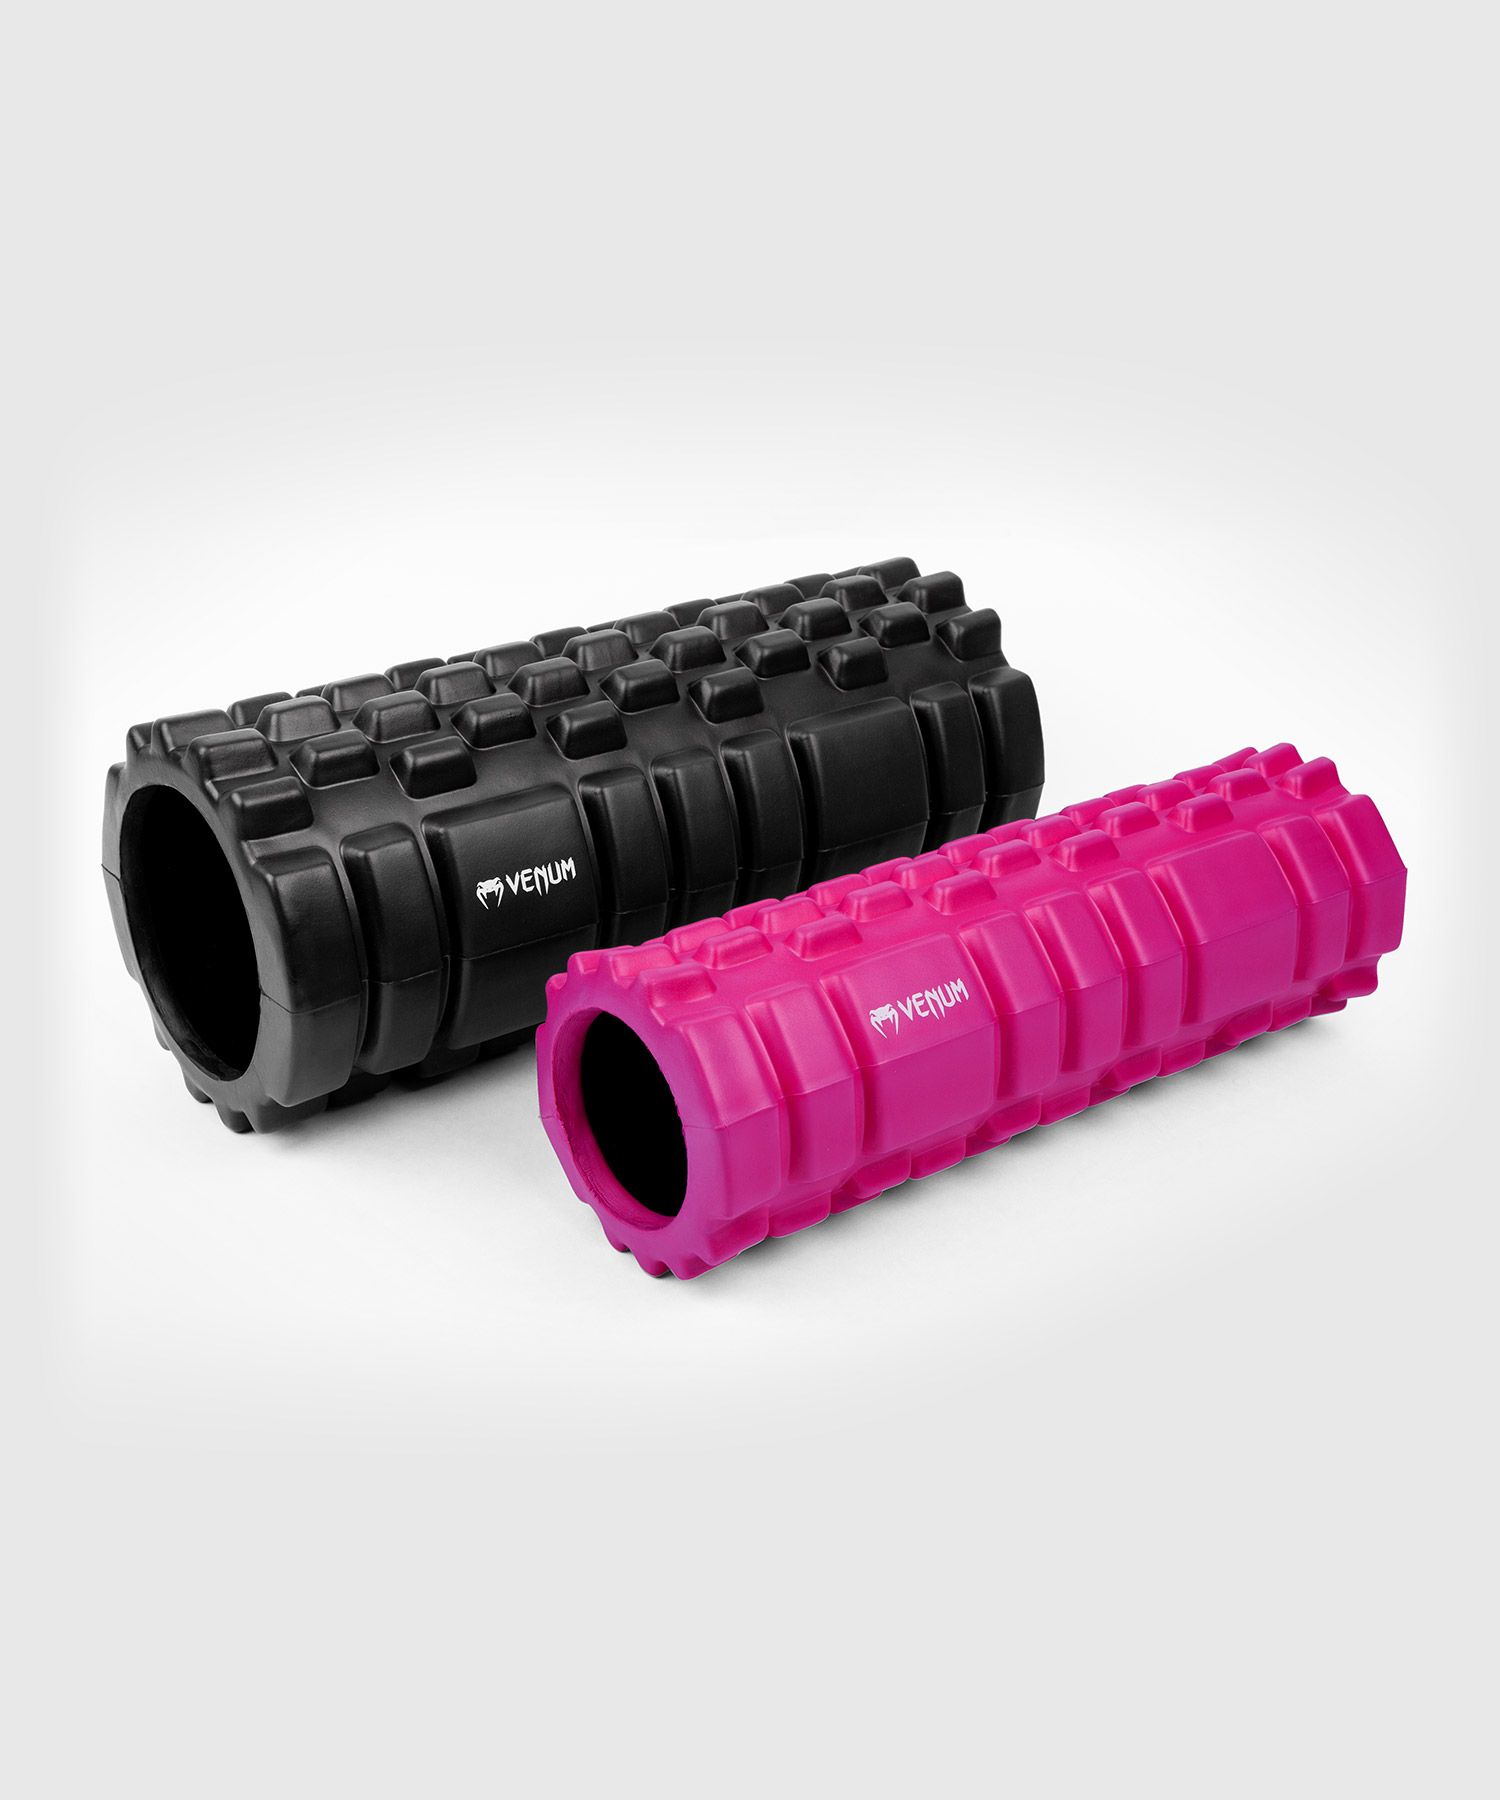 Venum Spirit Foam Roller - Black/Pink